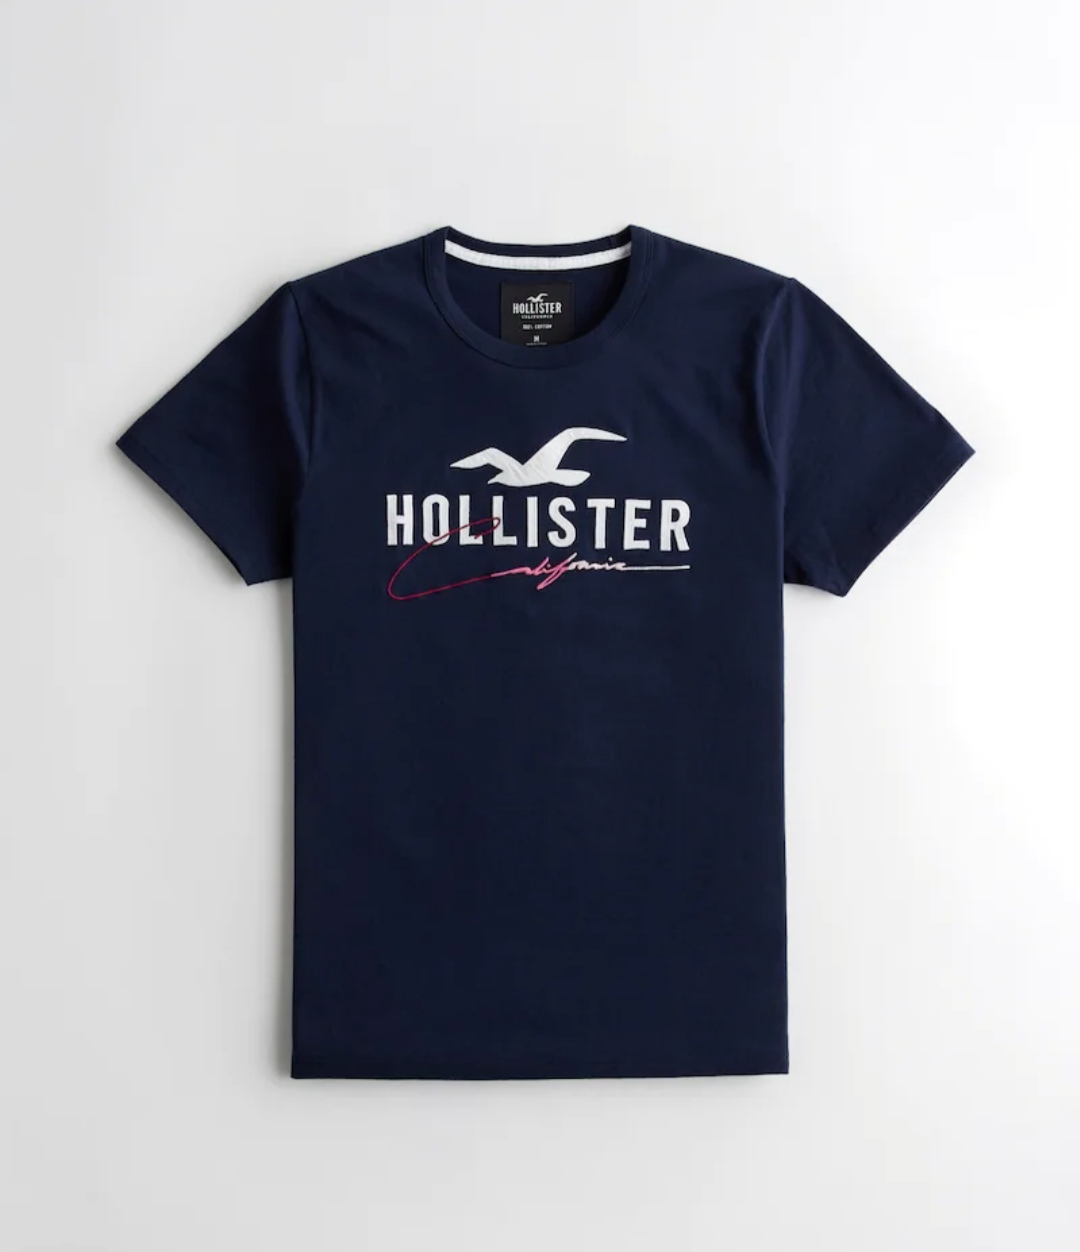 Hollister t-shirt – ONE Shopping Mall